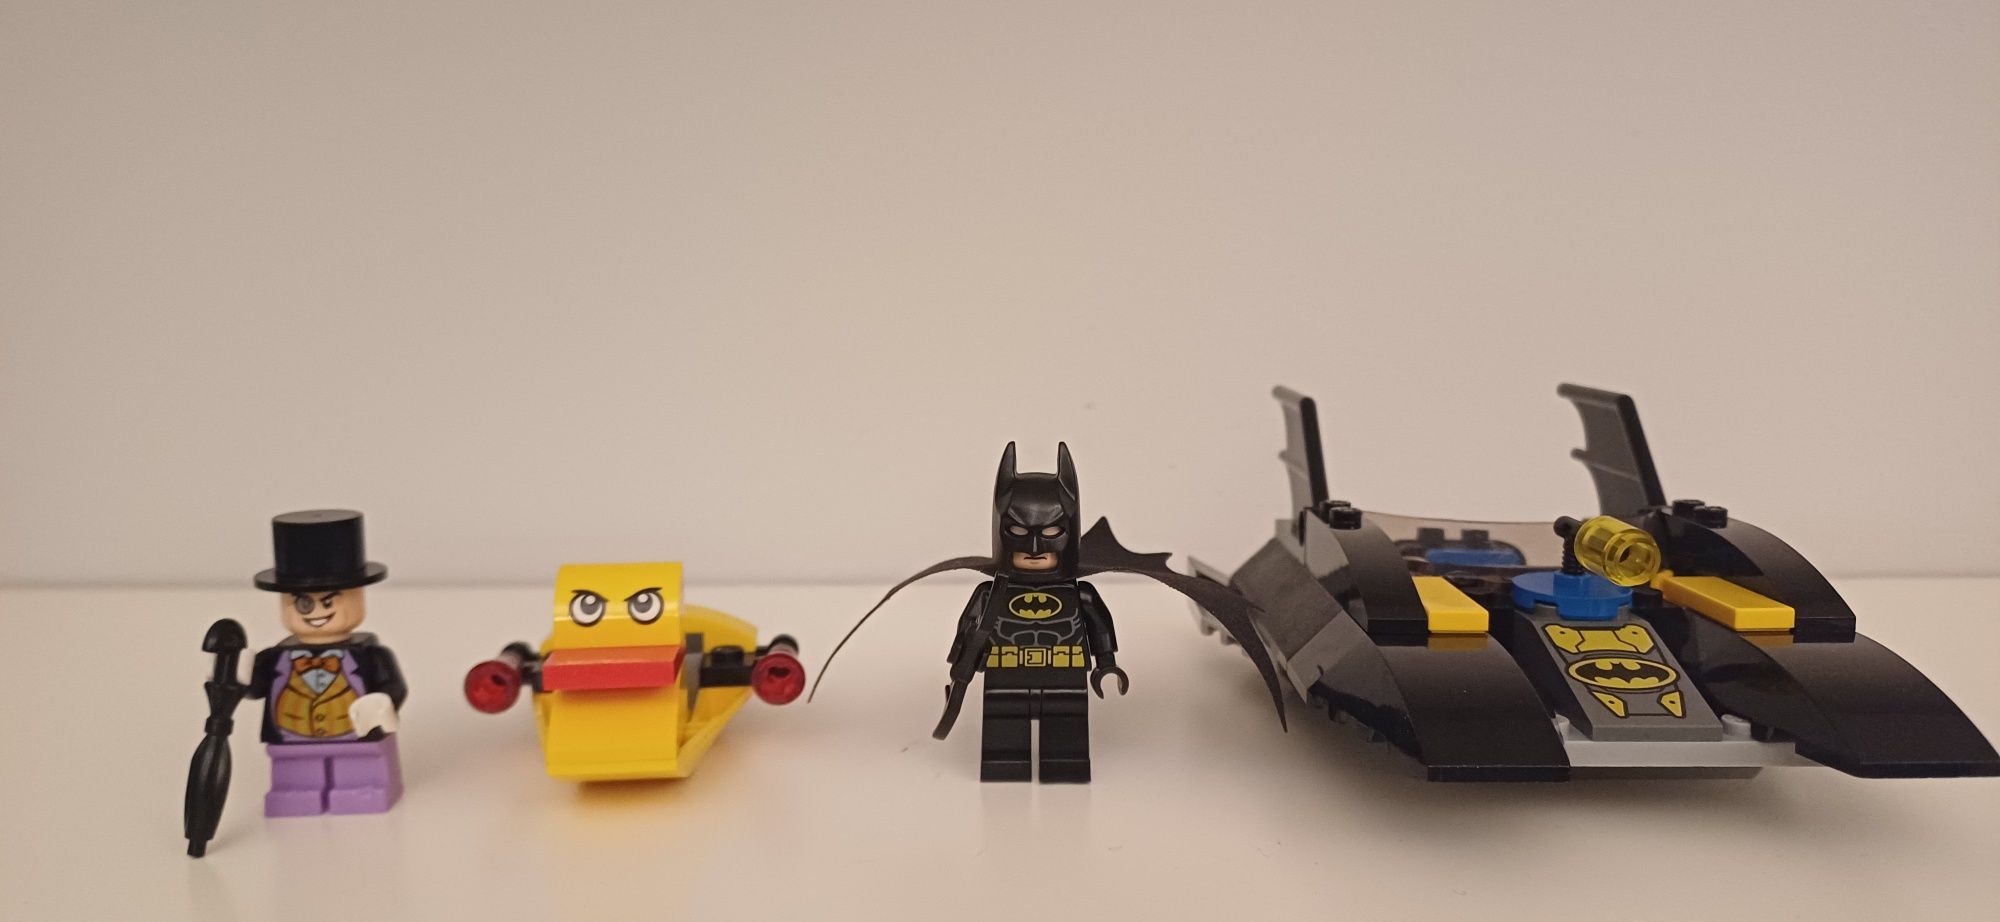 Lego 76158 DC Super Heroes - Batboat the Pinguin Pursuit